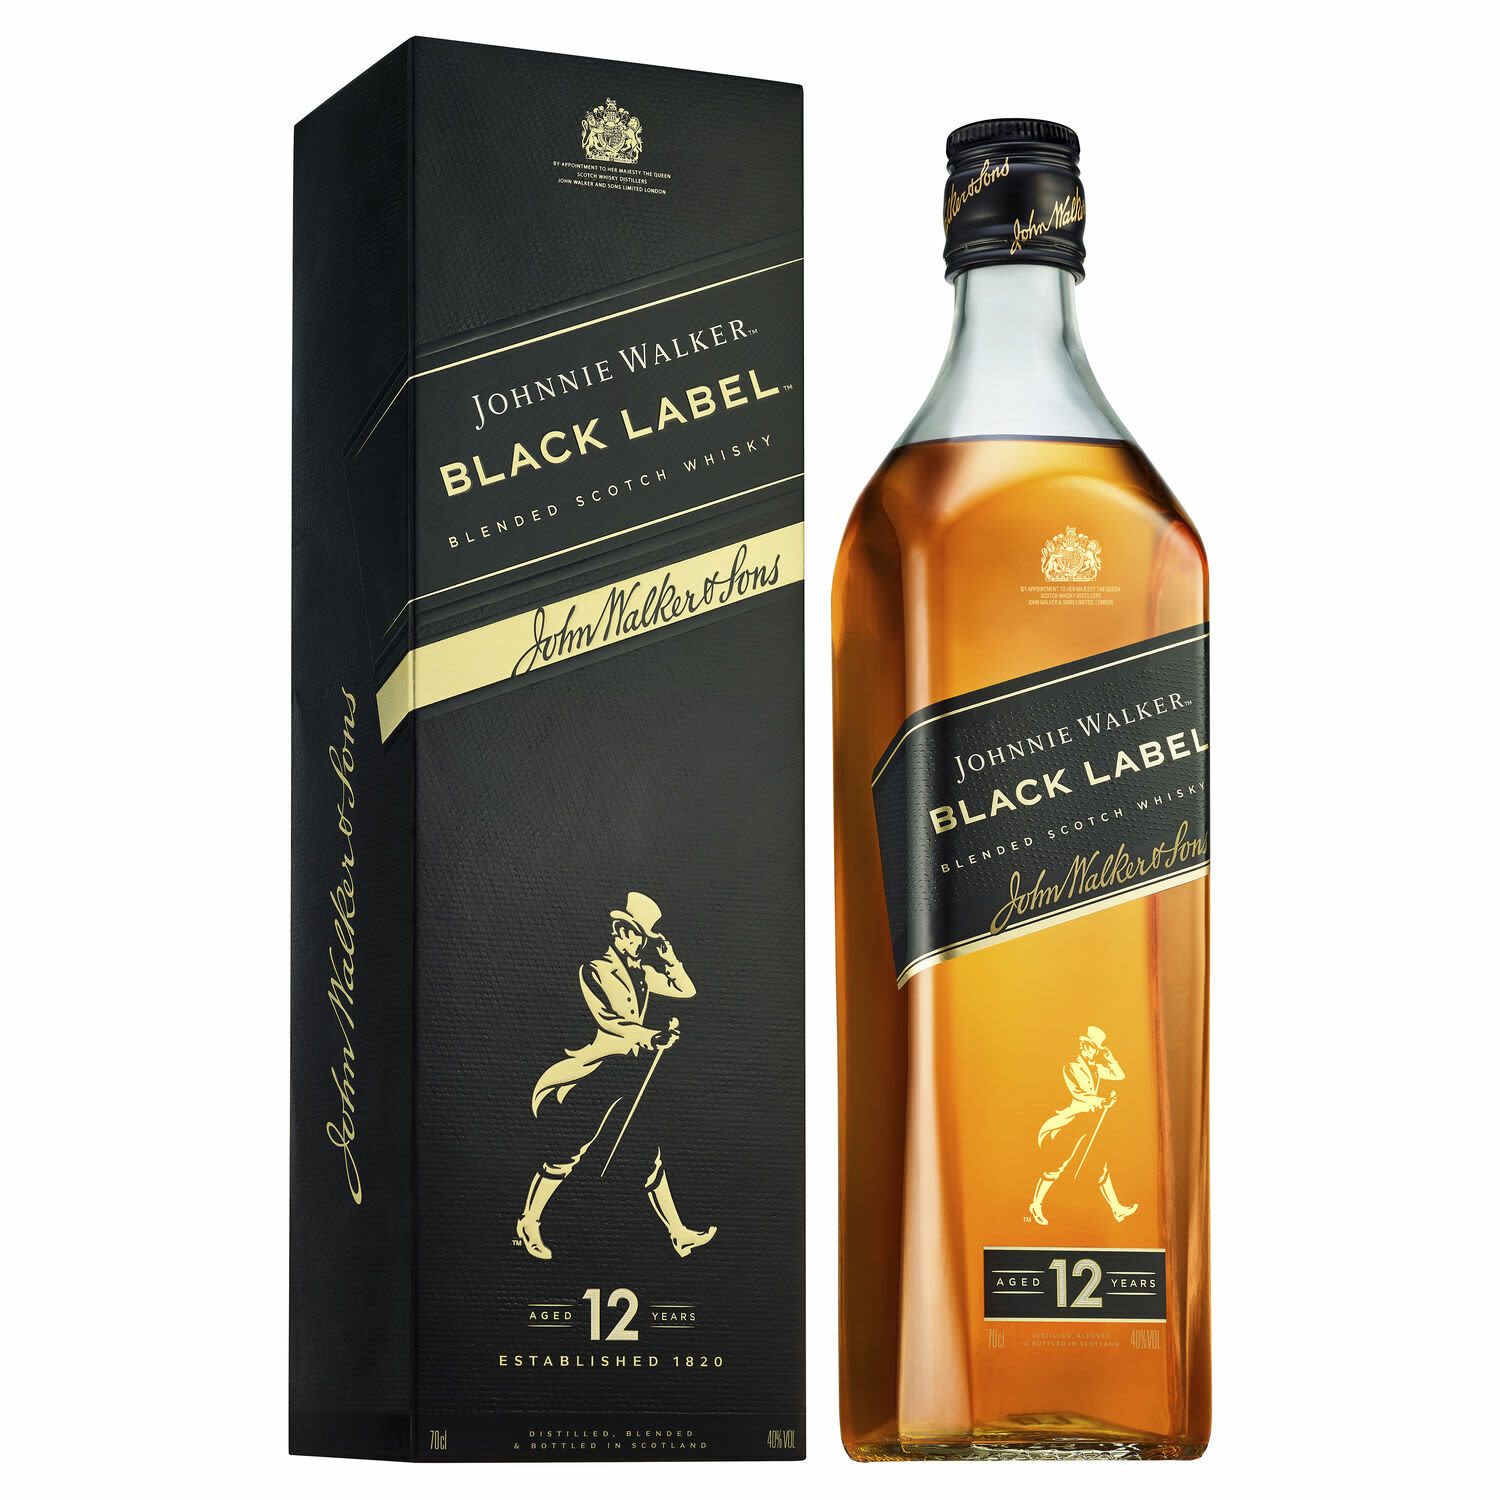 Johnnie Walker Black Label Scotch Whisky 700mL Bottle